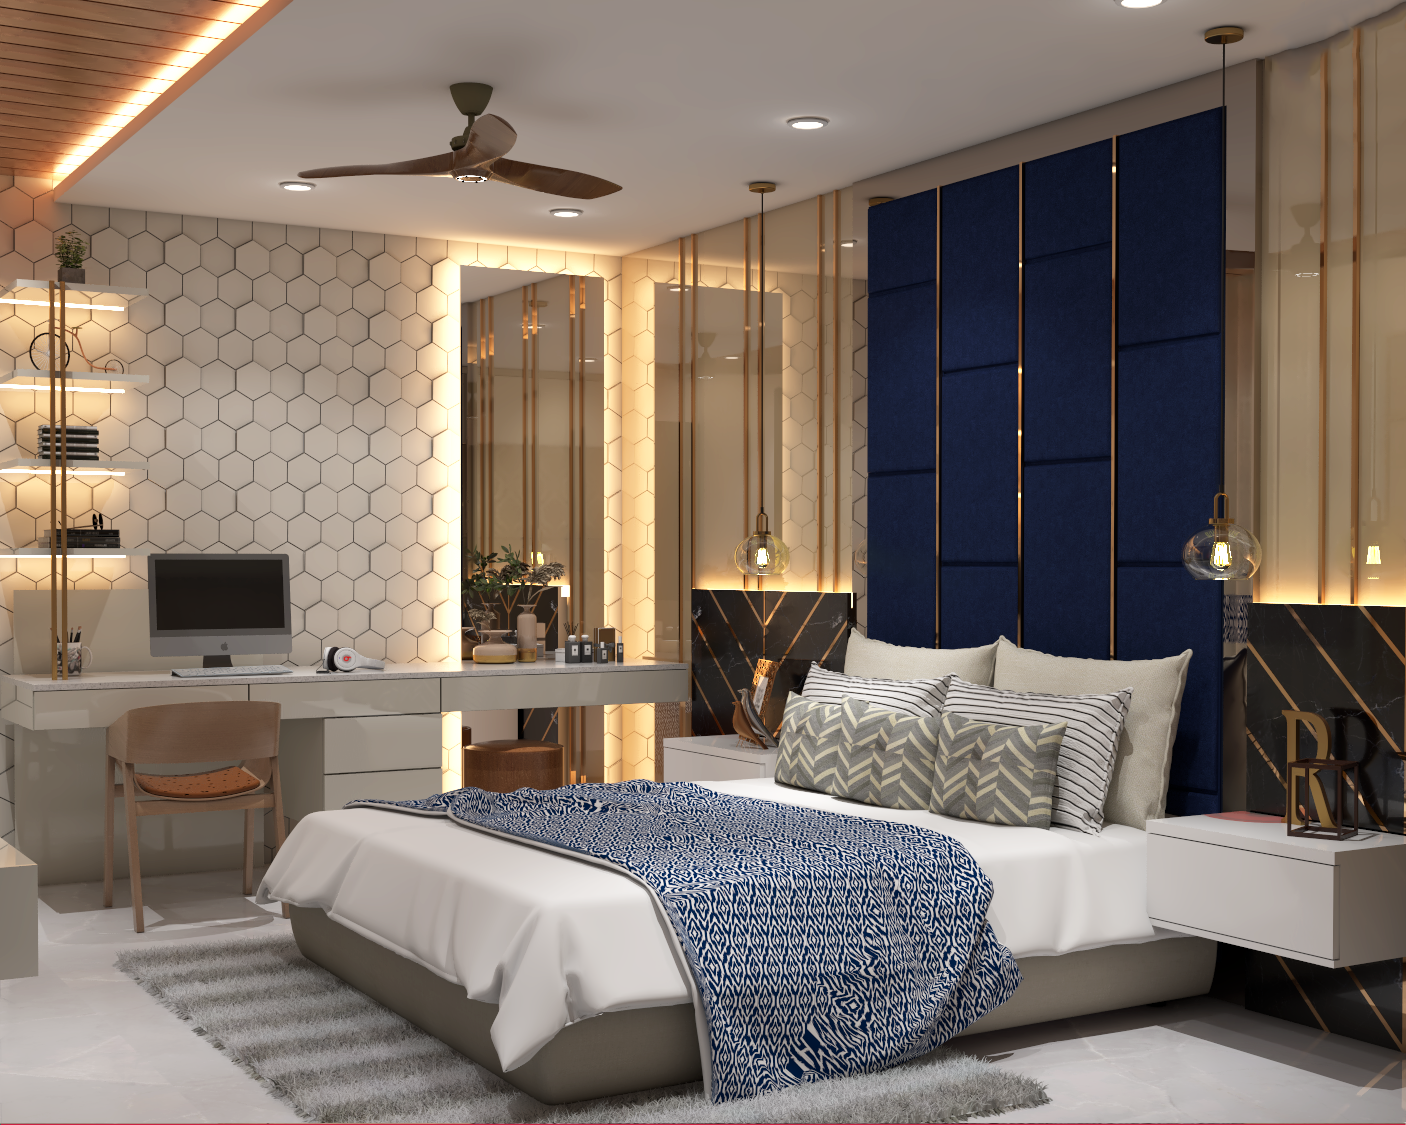 Contemporary Master Bedroom Design With Full Headboard